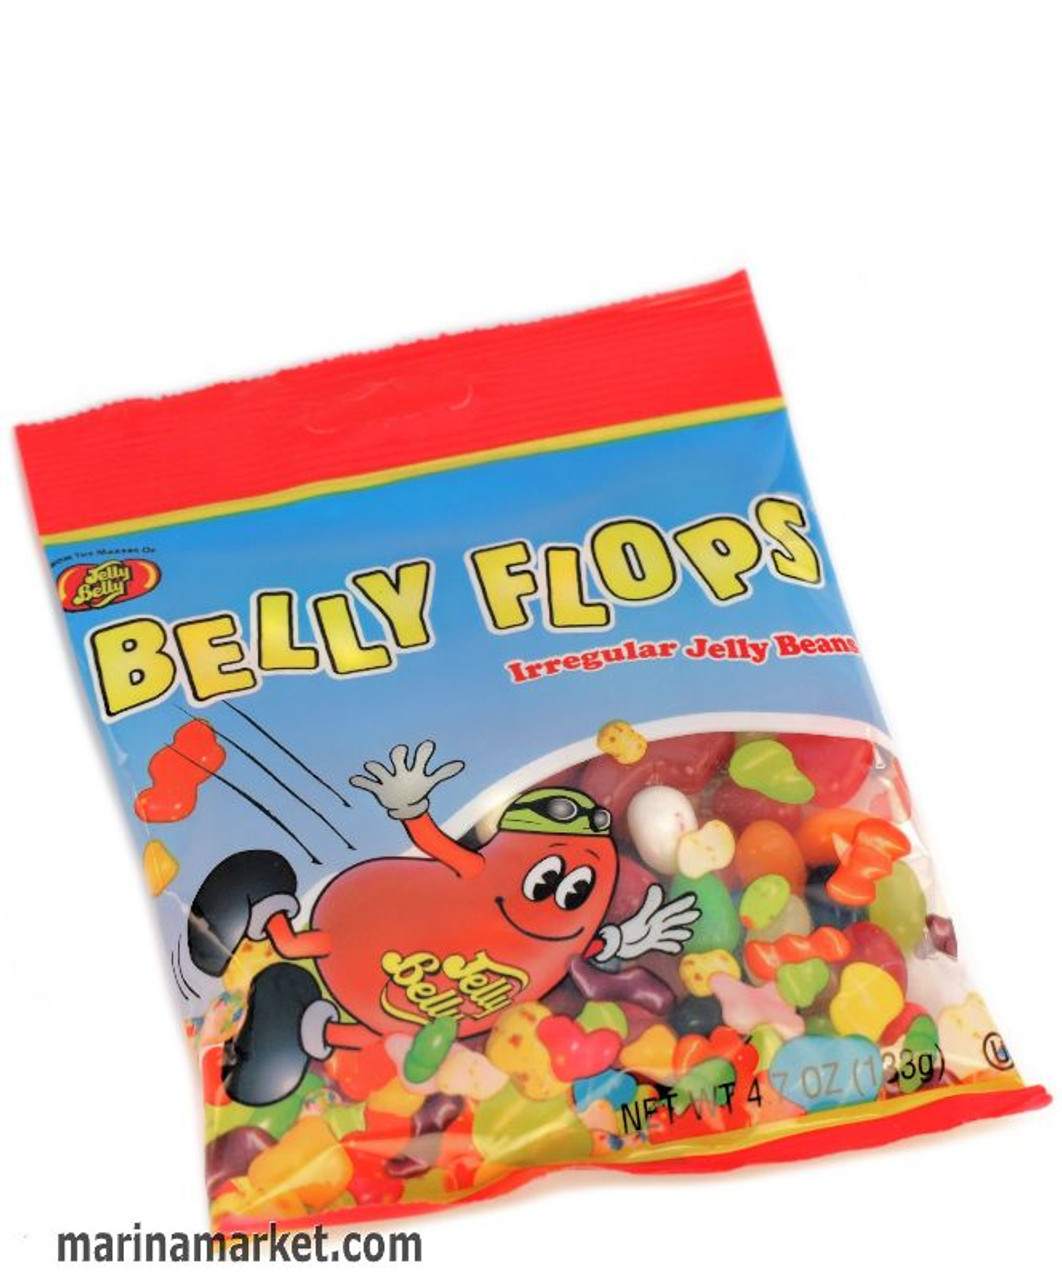 JELLY BELLY FLOPS 4.7oz